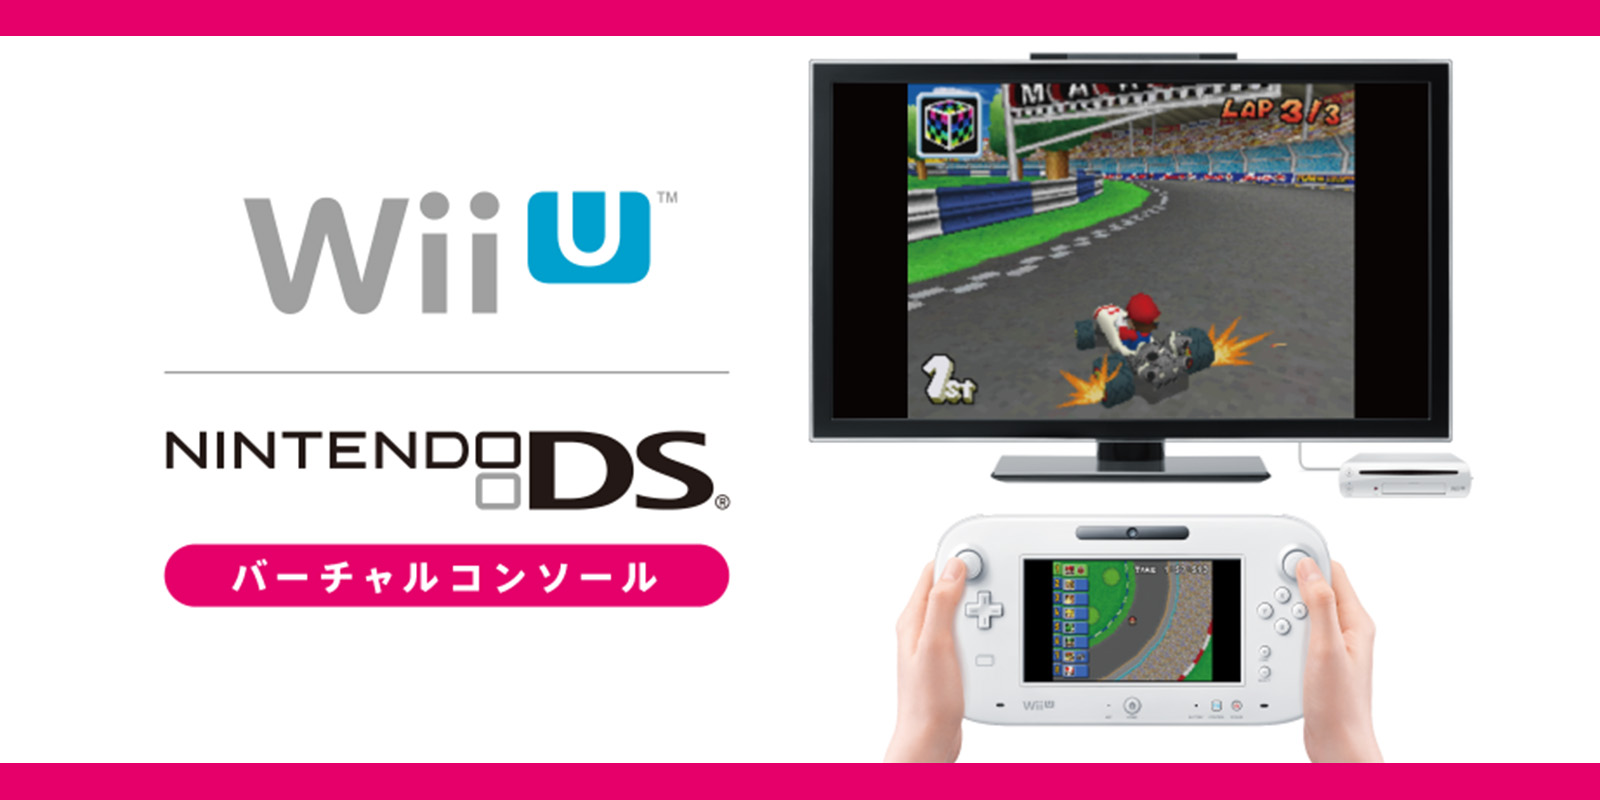 gesto envase Acelerar NERD Creates a High Speed, High Quality Nintendo DS Emulator for Wii U |  Nintendo European Research & Development